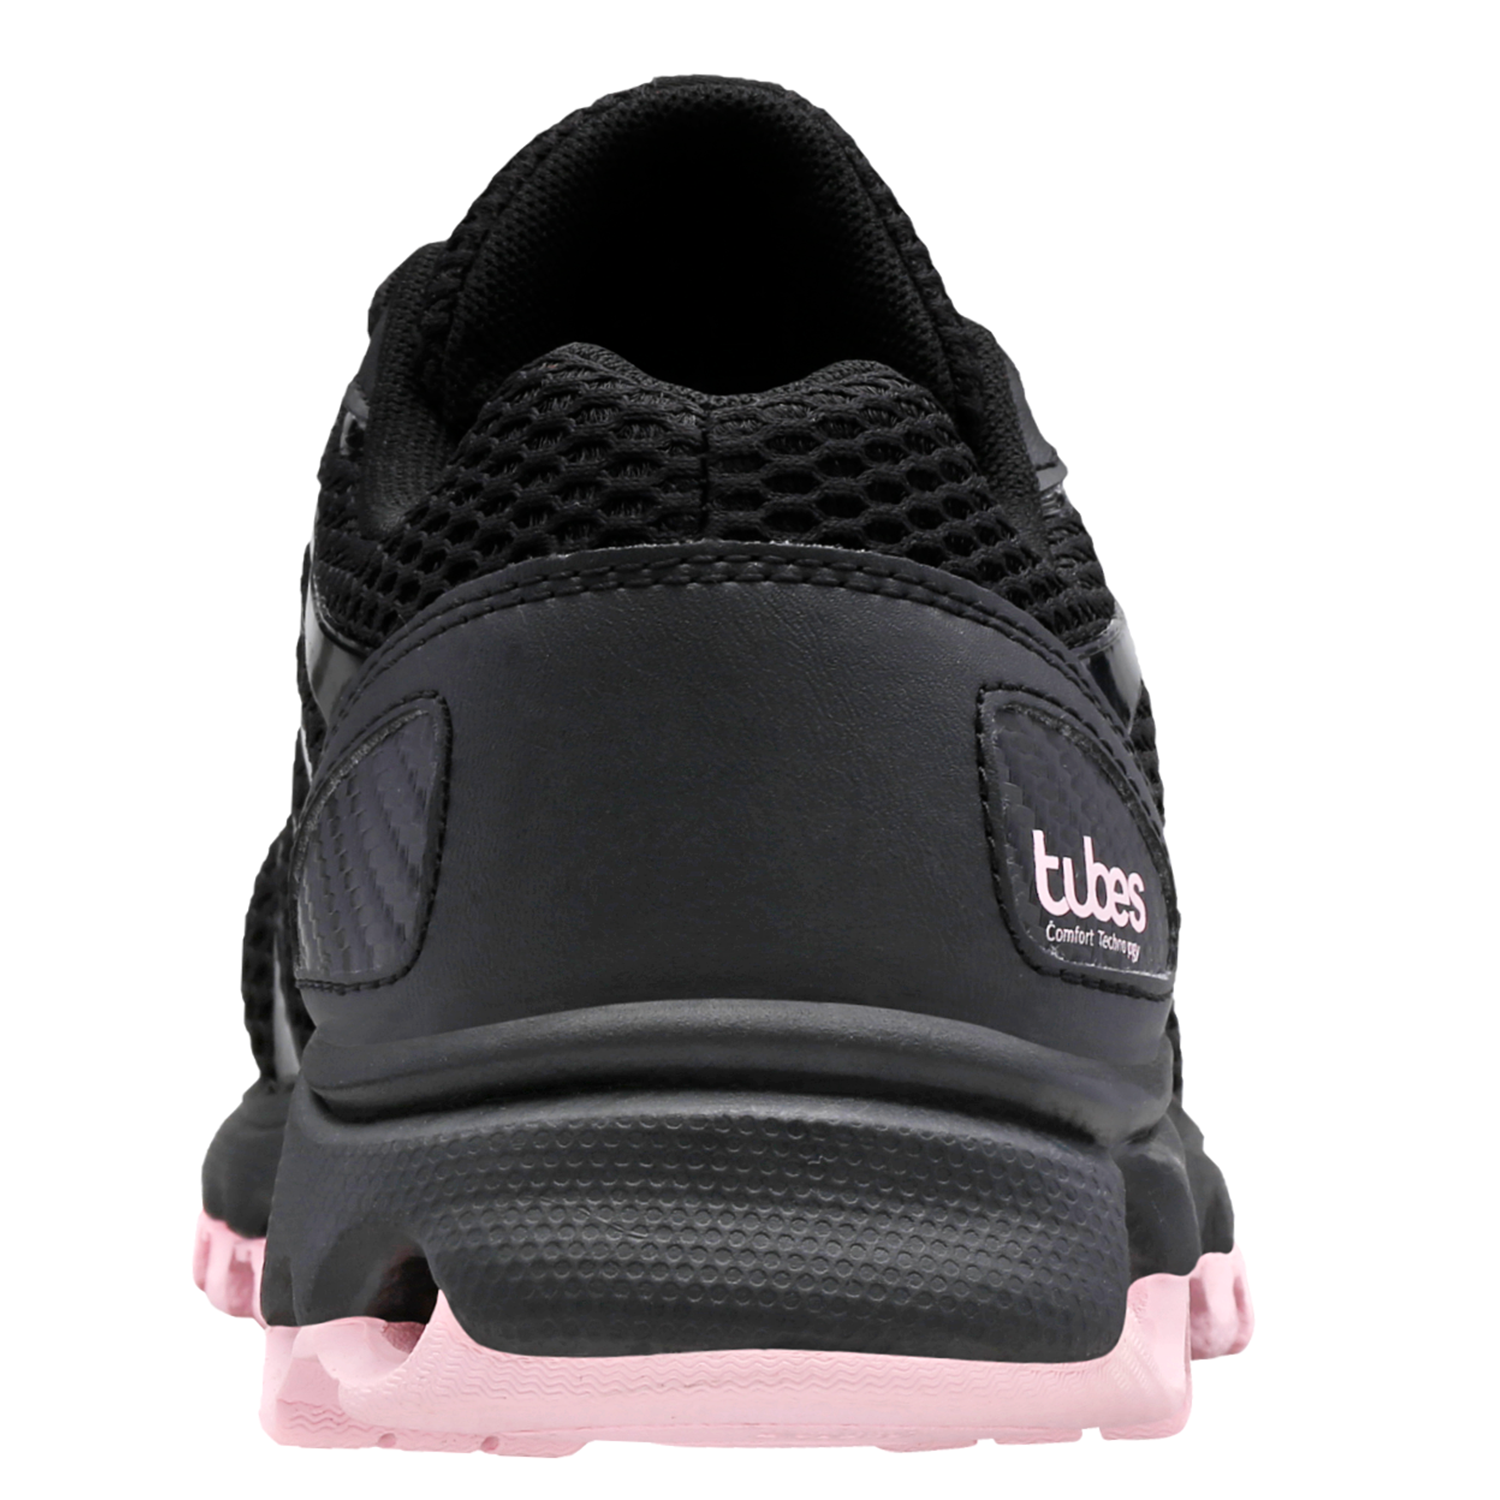 K-SWISS TUBES Comfort 200 Damen Sneaker Sportschuhe 97112 Schwarz